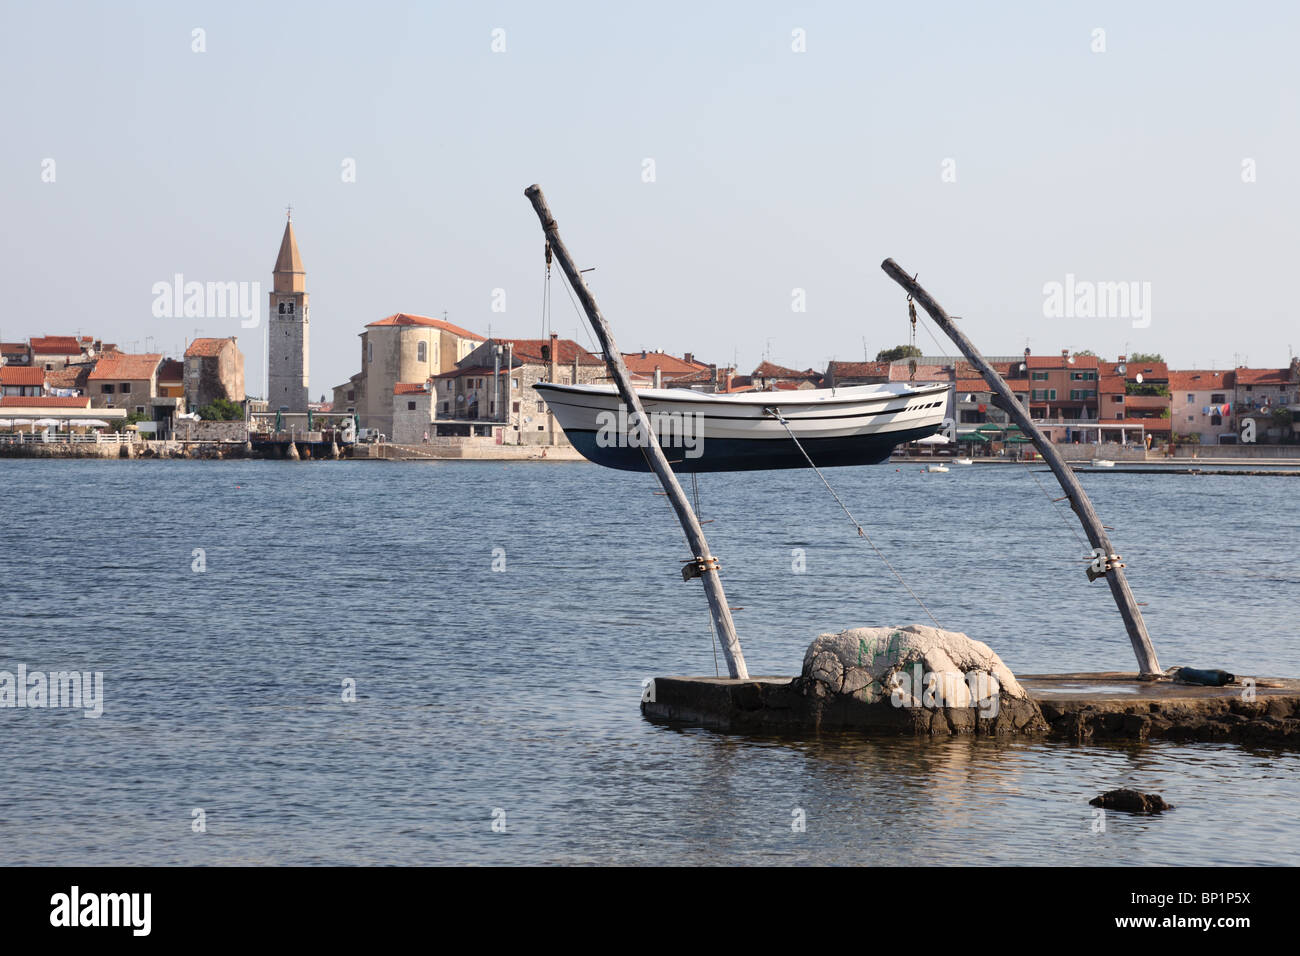 Croatian town Umag at the Adriatic Sea Stock Photo